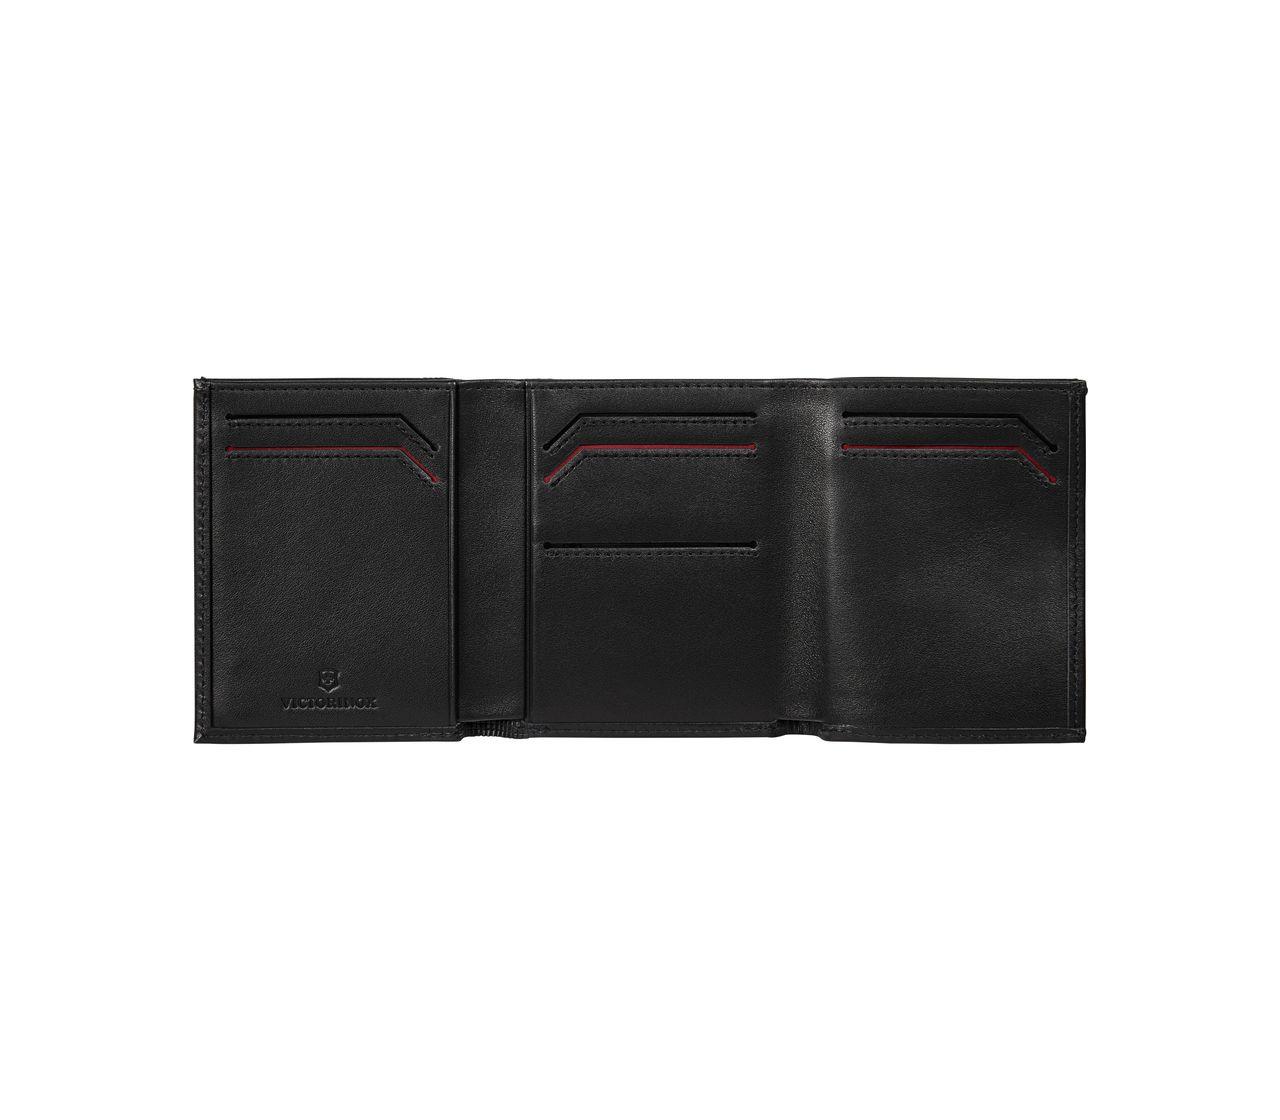 Valise Noir VictorinoxVictorinox 611578 Altius Alox Bi-Fold Card Case Black Unisexe Adulte Luggage Taille Unique Marque  